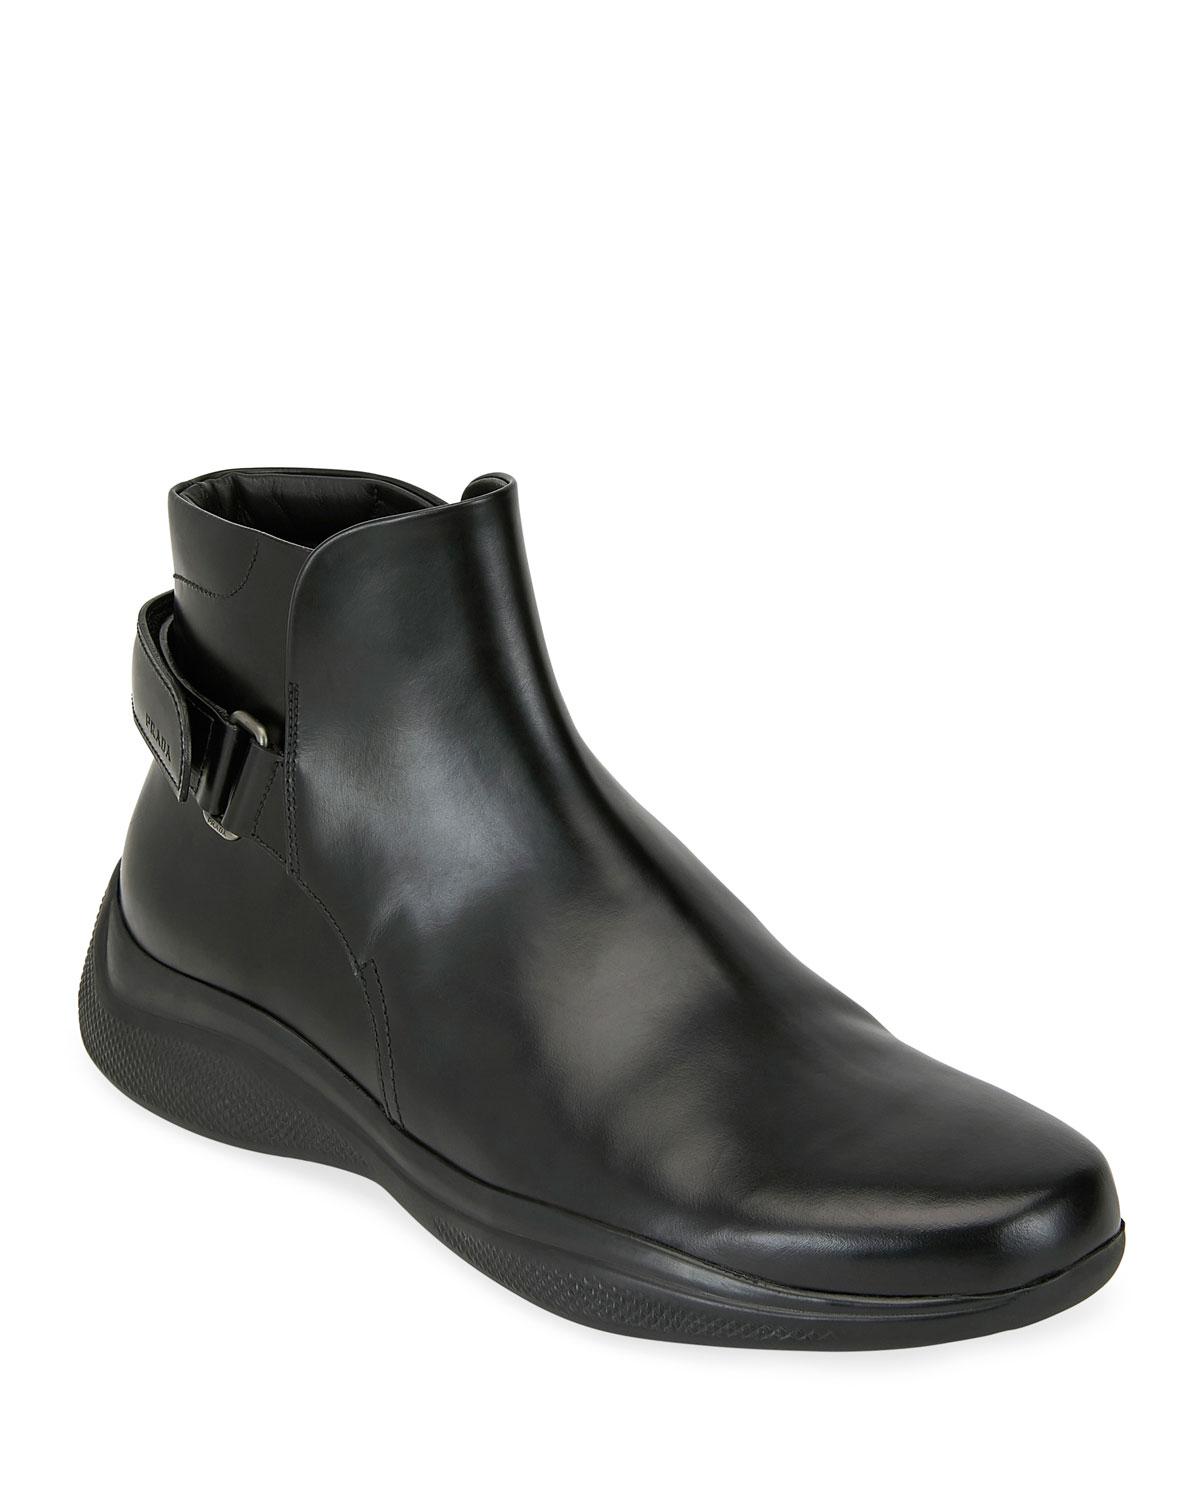 Prada Men's Spazzolato Leather Combat Boots in Black for Men - Lyst